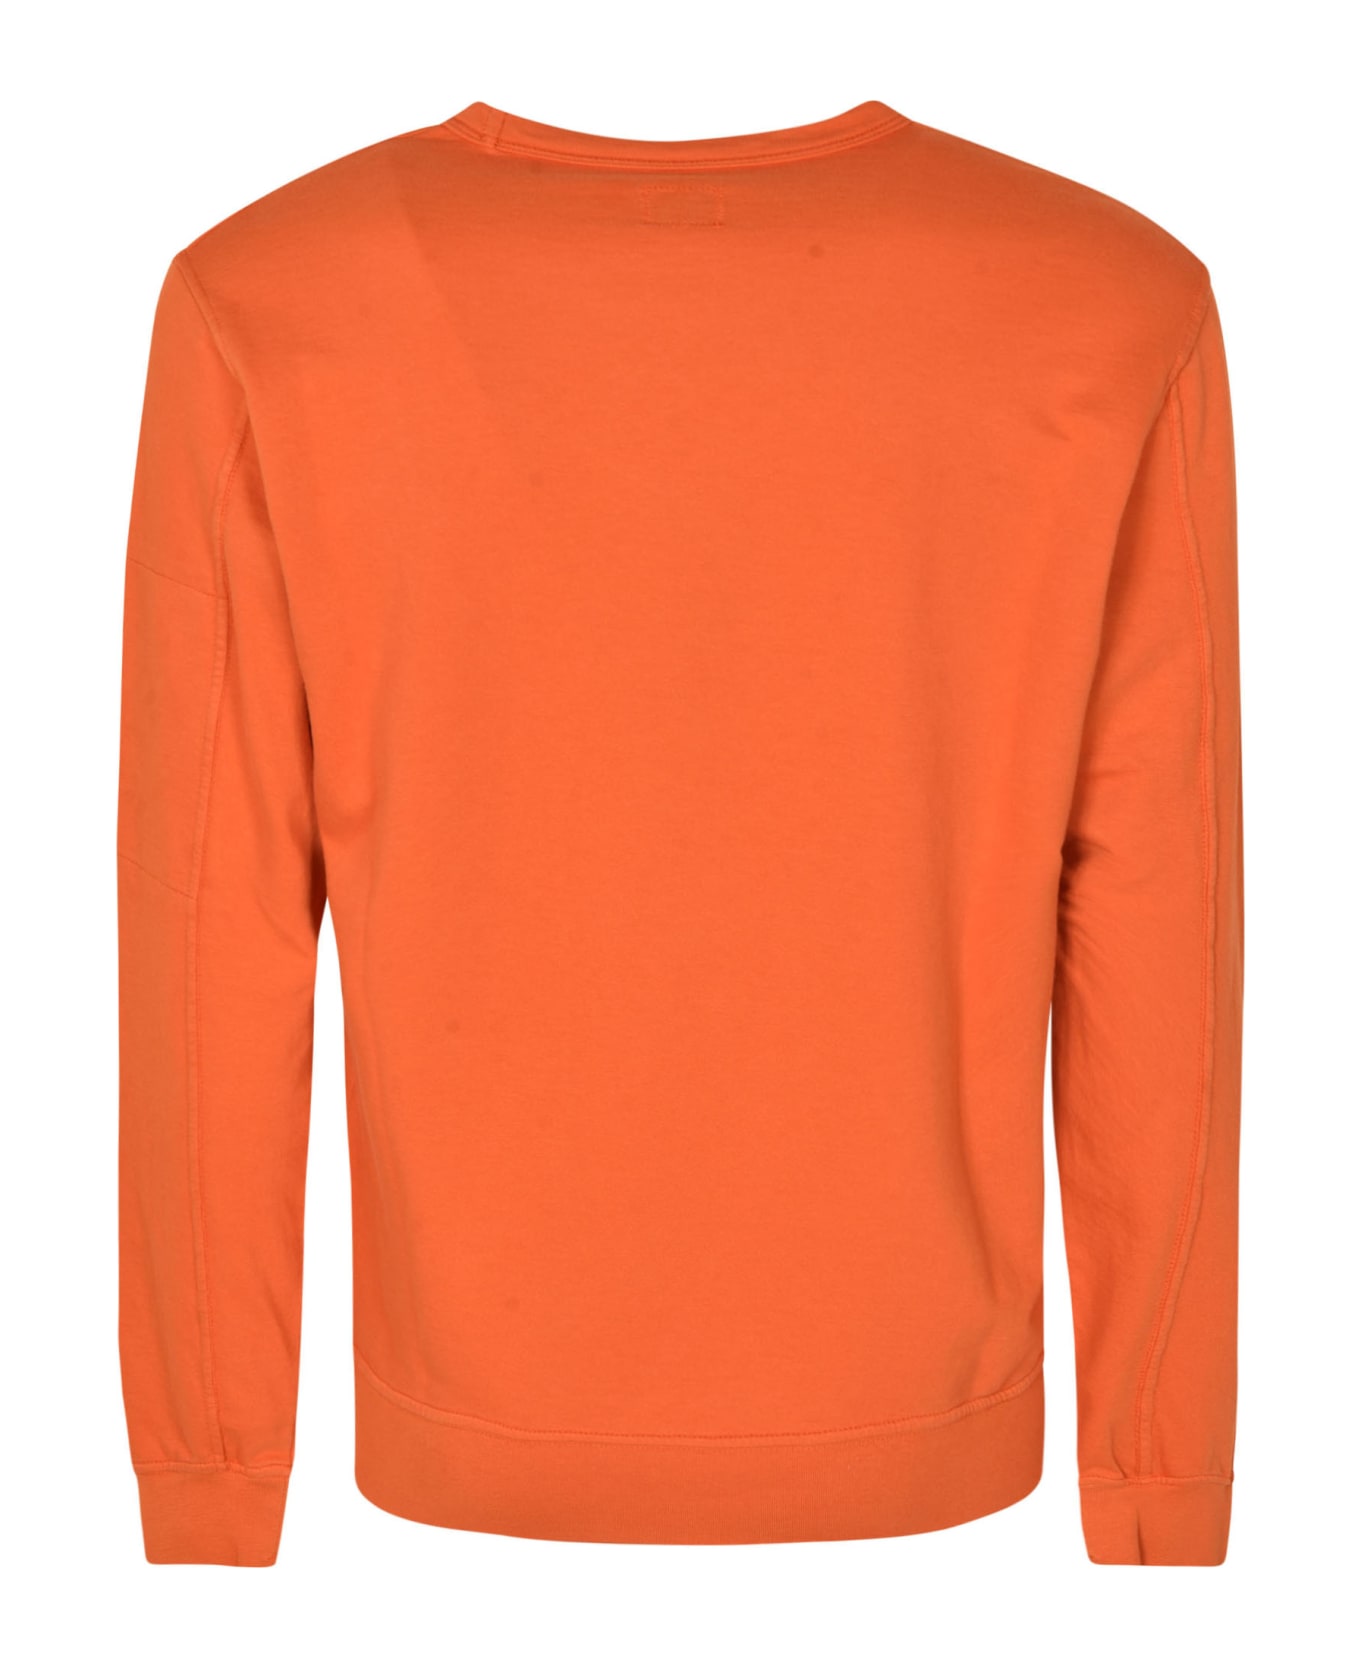 C.P. Company Light Fleece Sweatshirt - Orange